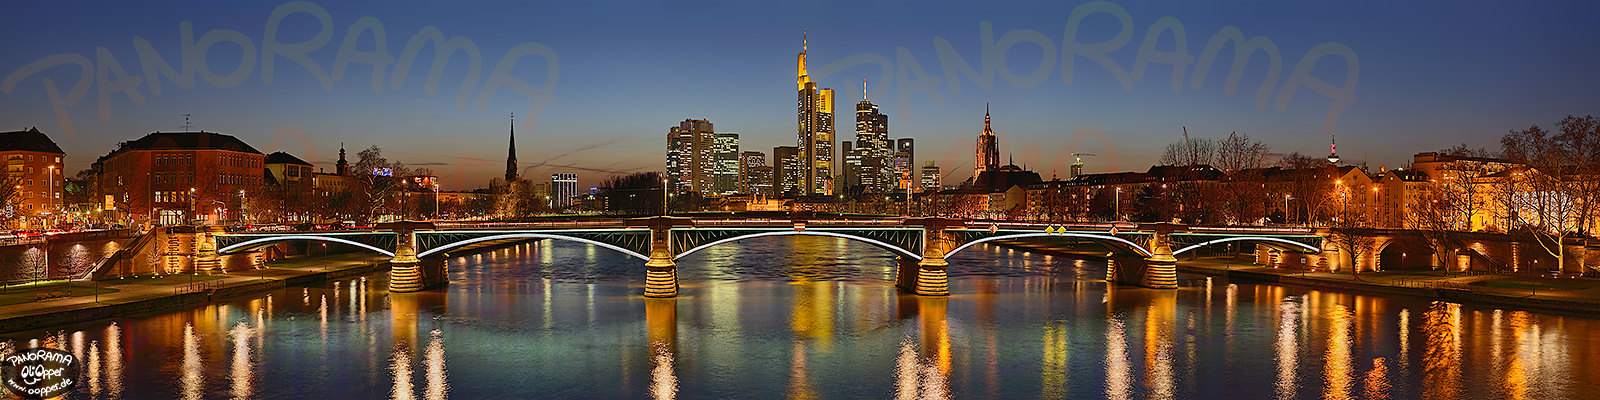 Skyline Frankfurt - p162 - (c) by Oliver Opper